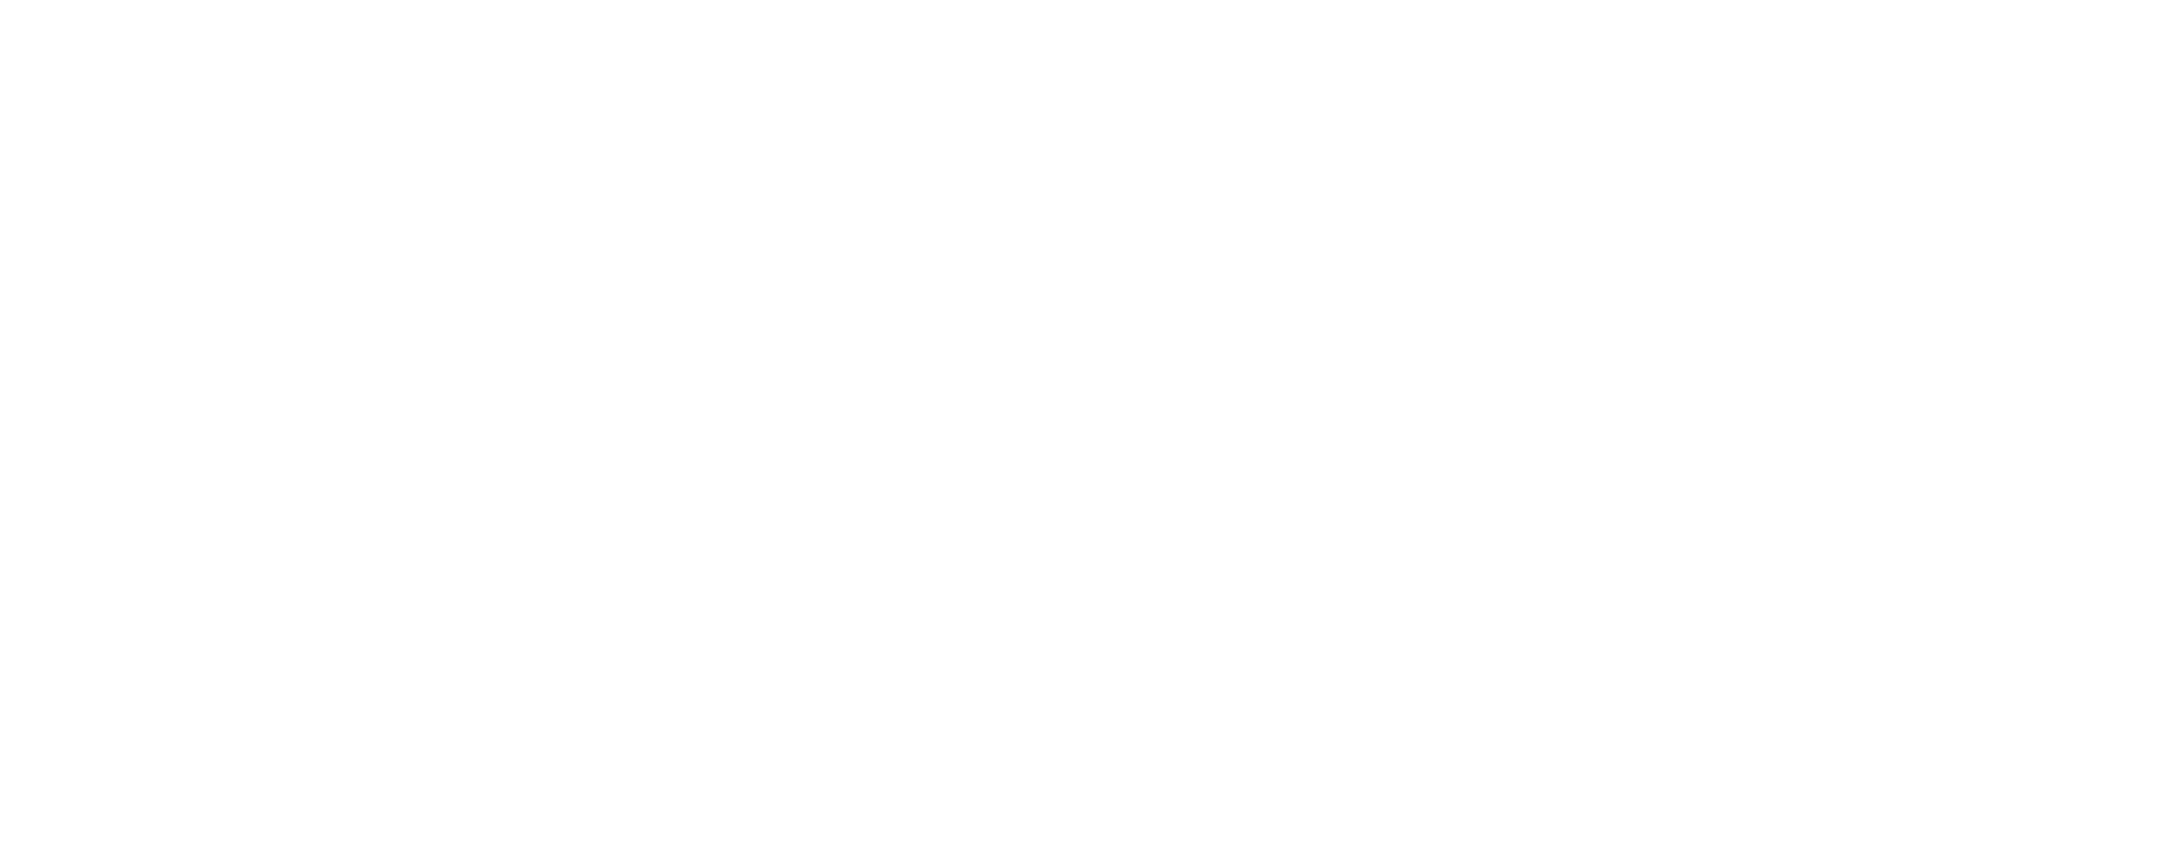 Santosha Rose